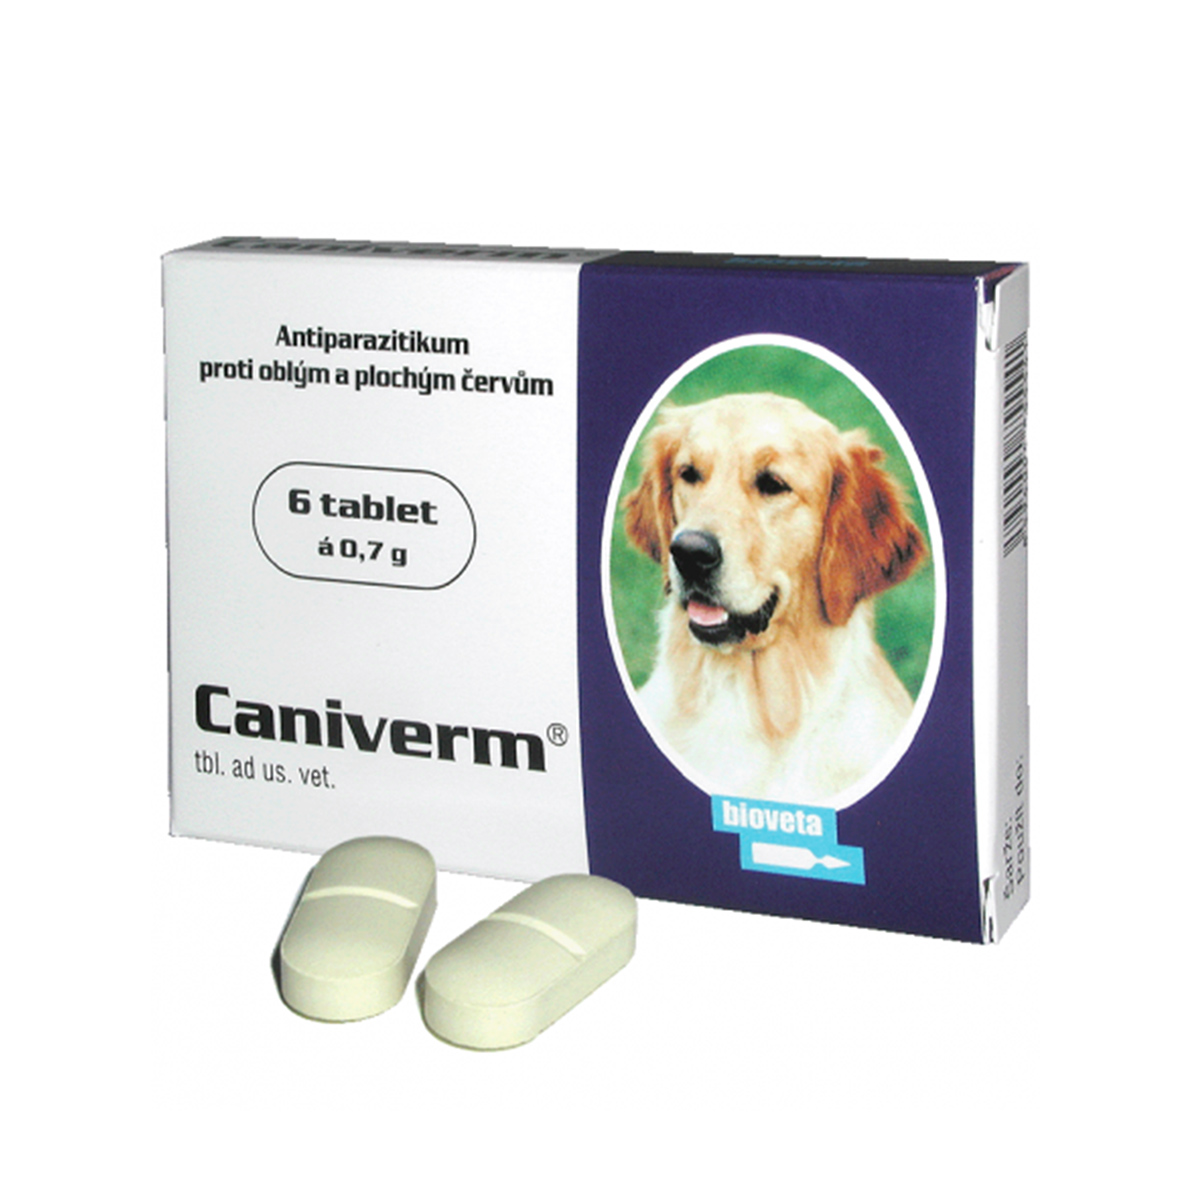 Caniverm 0,7 g, 100 tablete Bioveta